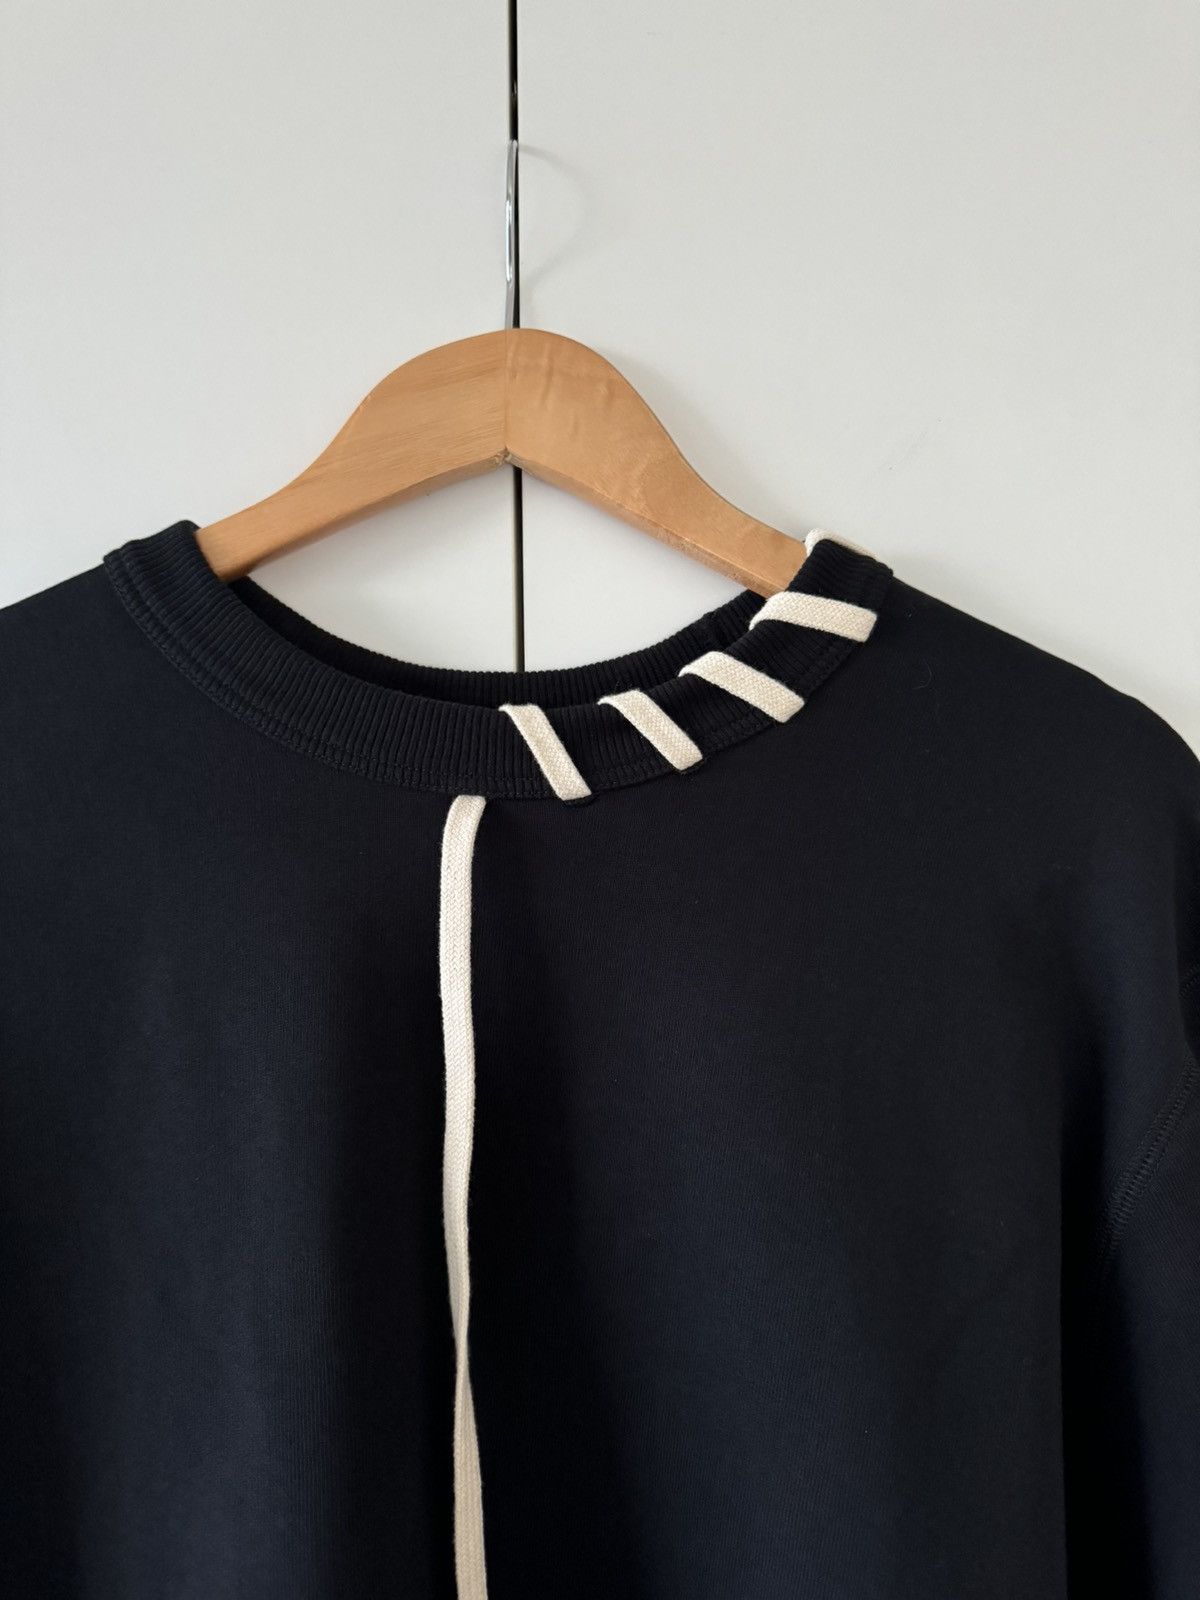 Craig Green Black Laced Sweatshirt FW21 XL Size US XL / EU 56 / 4 - 2 Preview